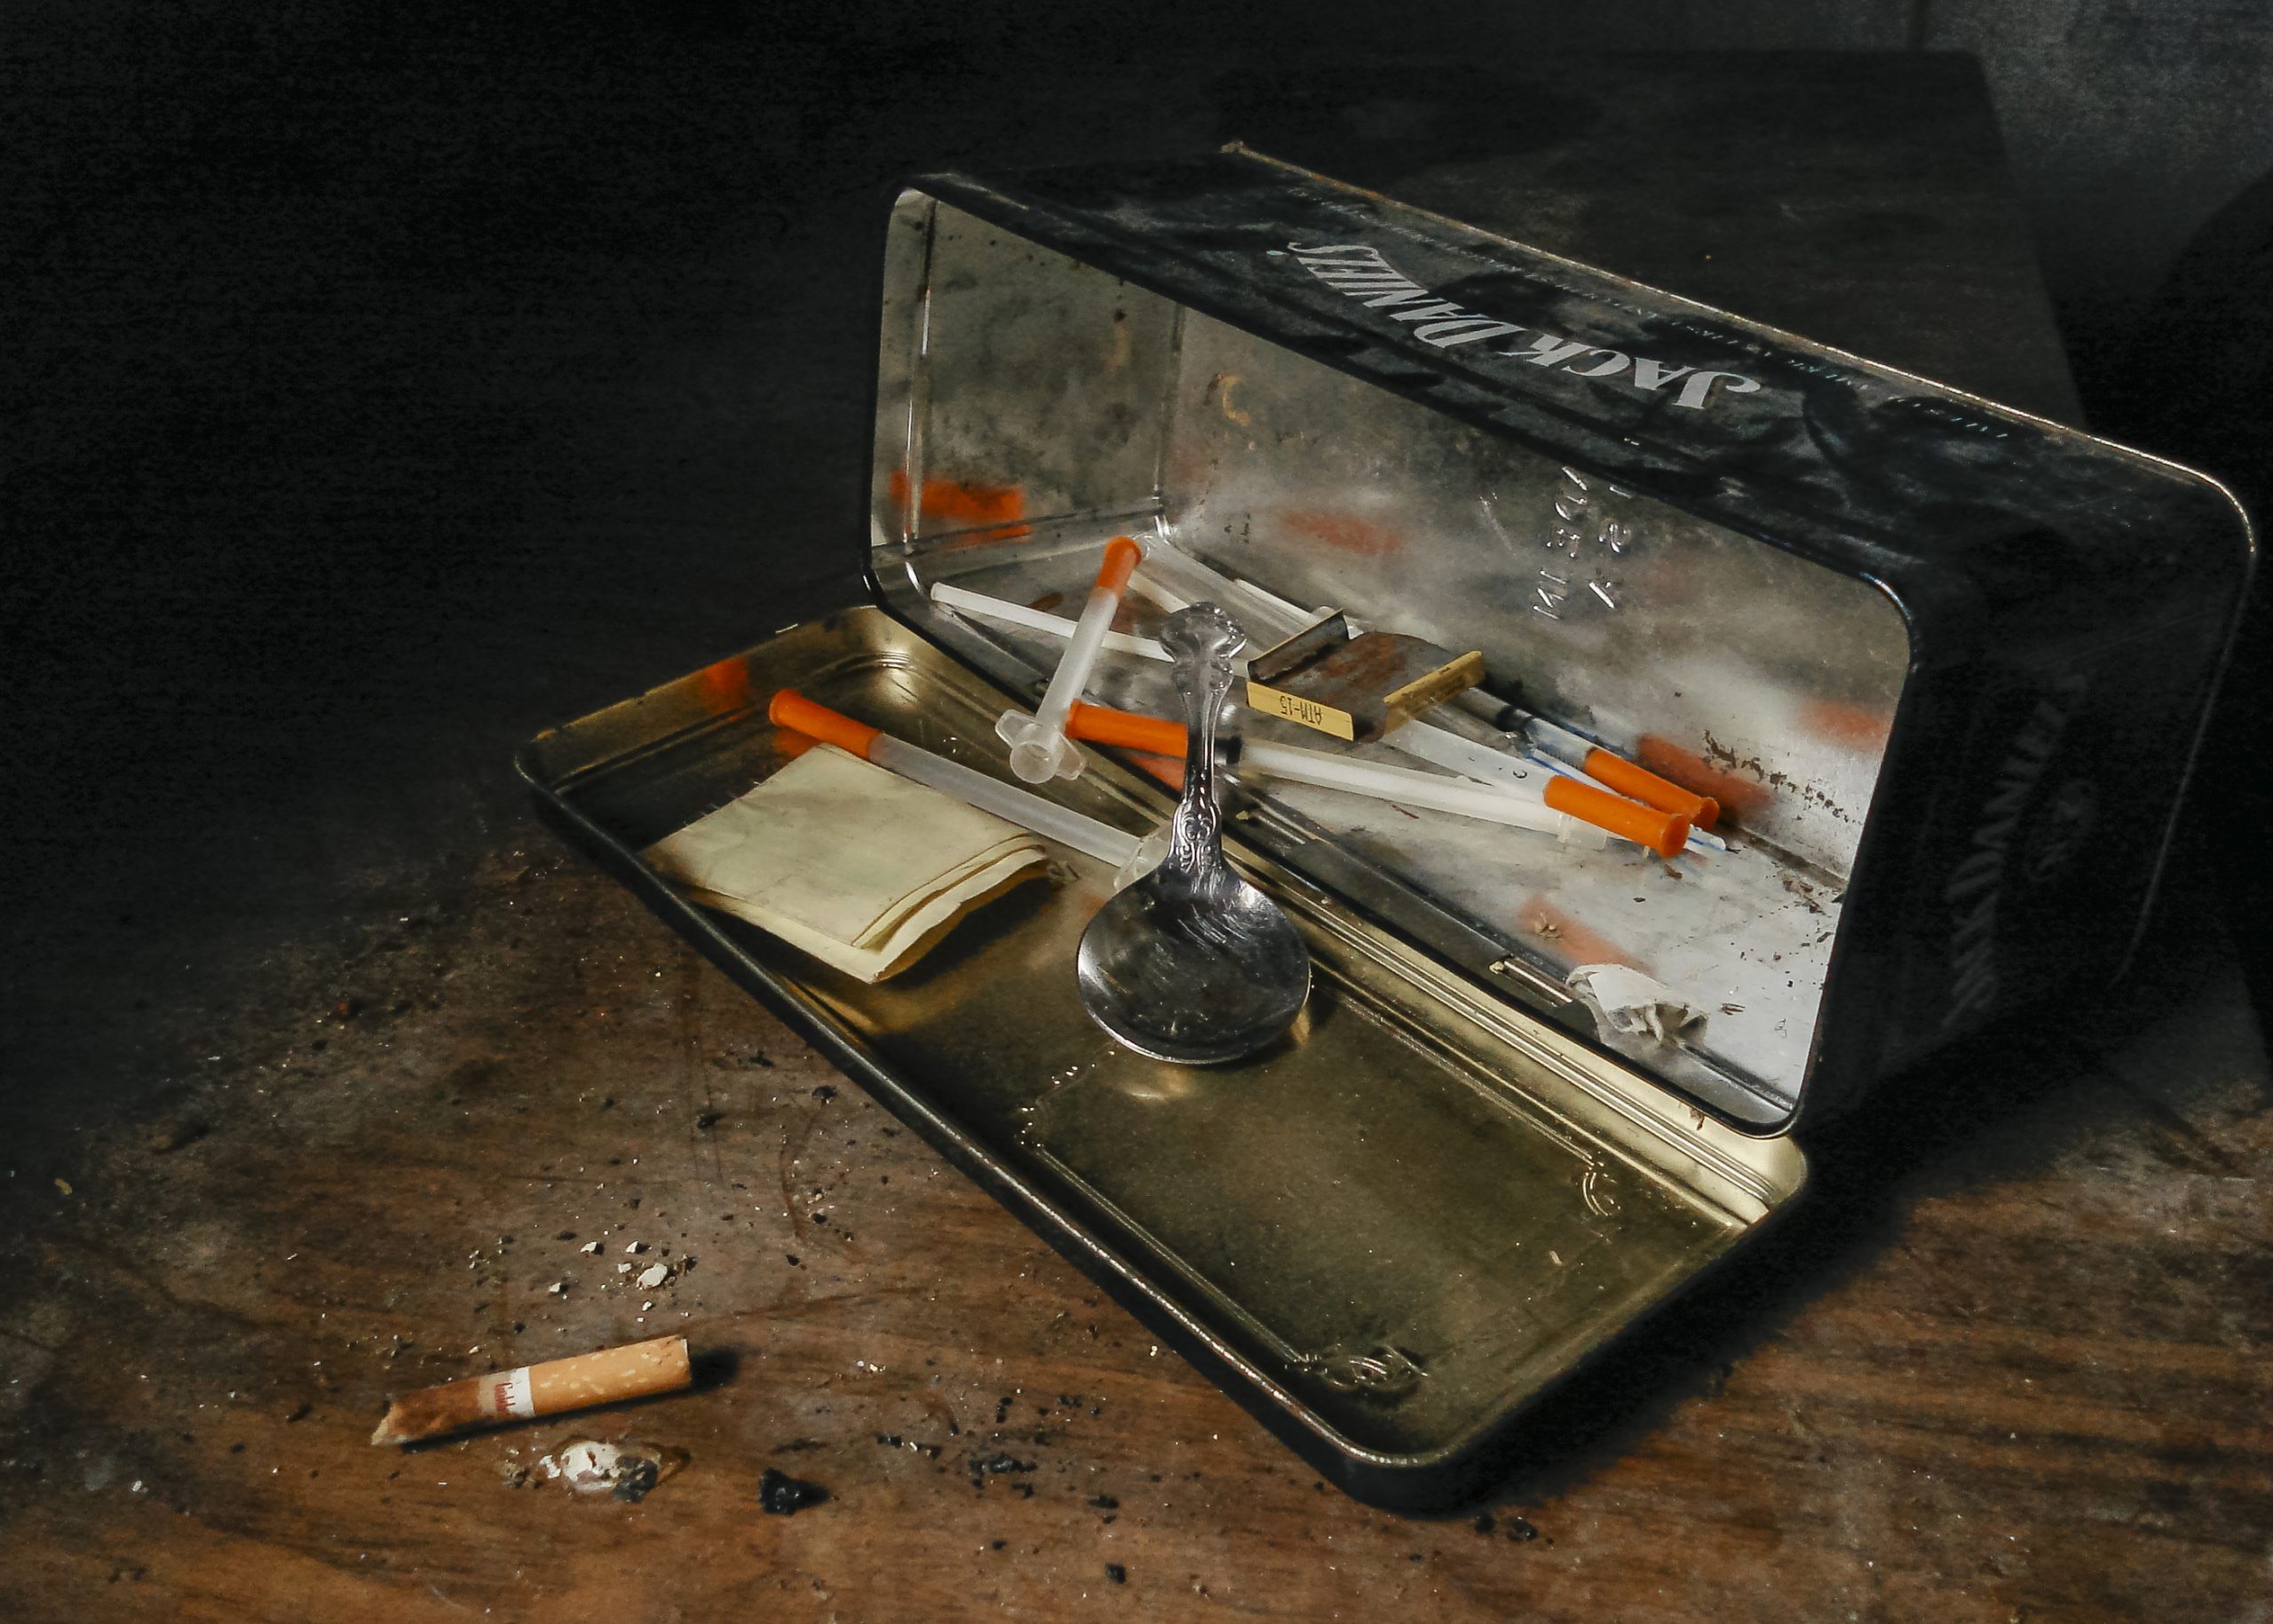 A junkie kit, heroin paraphernalia in a Jack Daniels tin